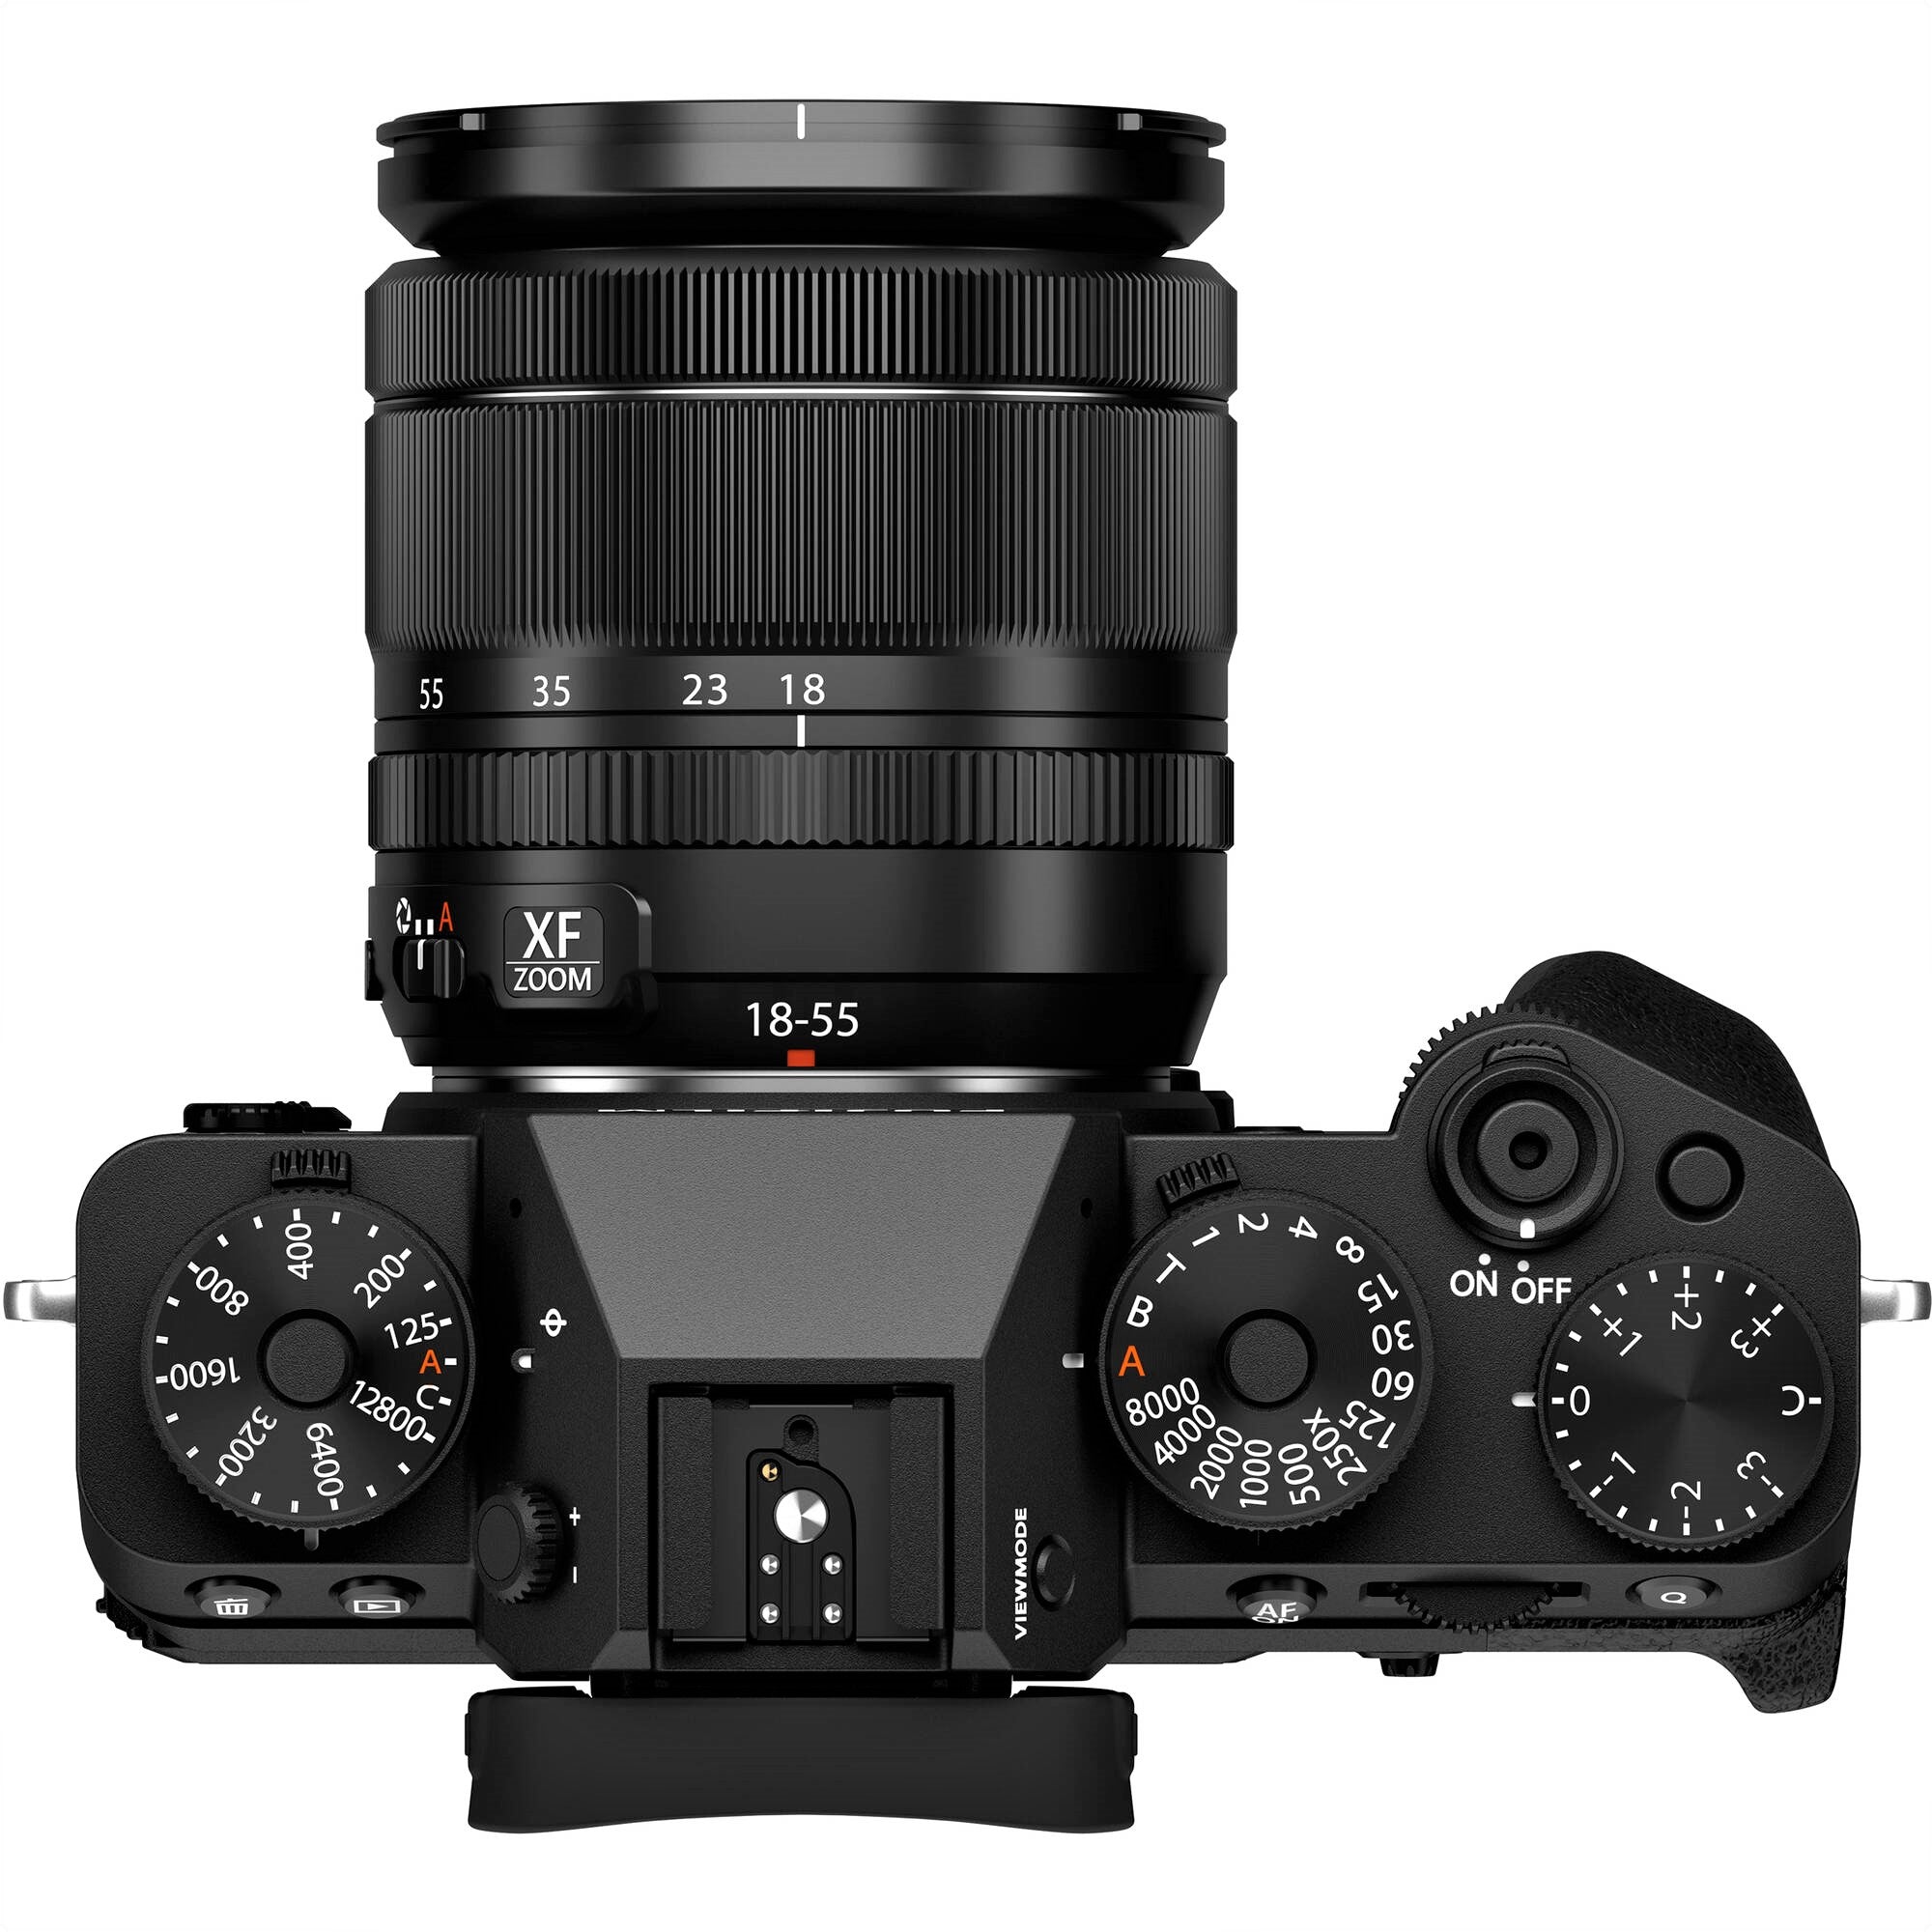 Fujifilm X-T5 Mirrorless Camera with 18-55mm Lens (Black) - Top View